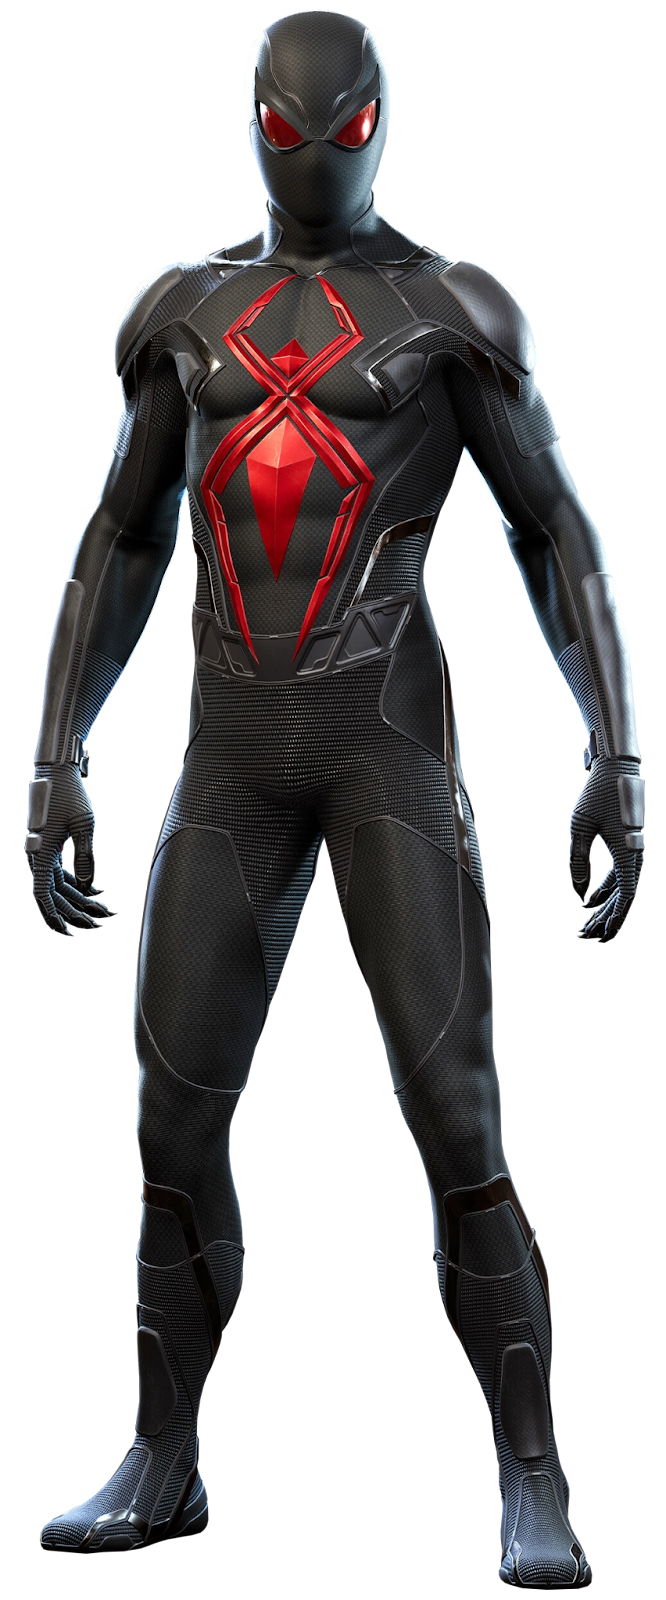 Spider-Man Dark suit from the Playstation Spider-man video game